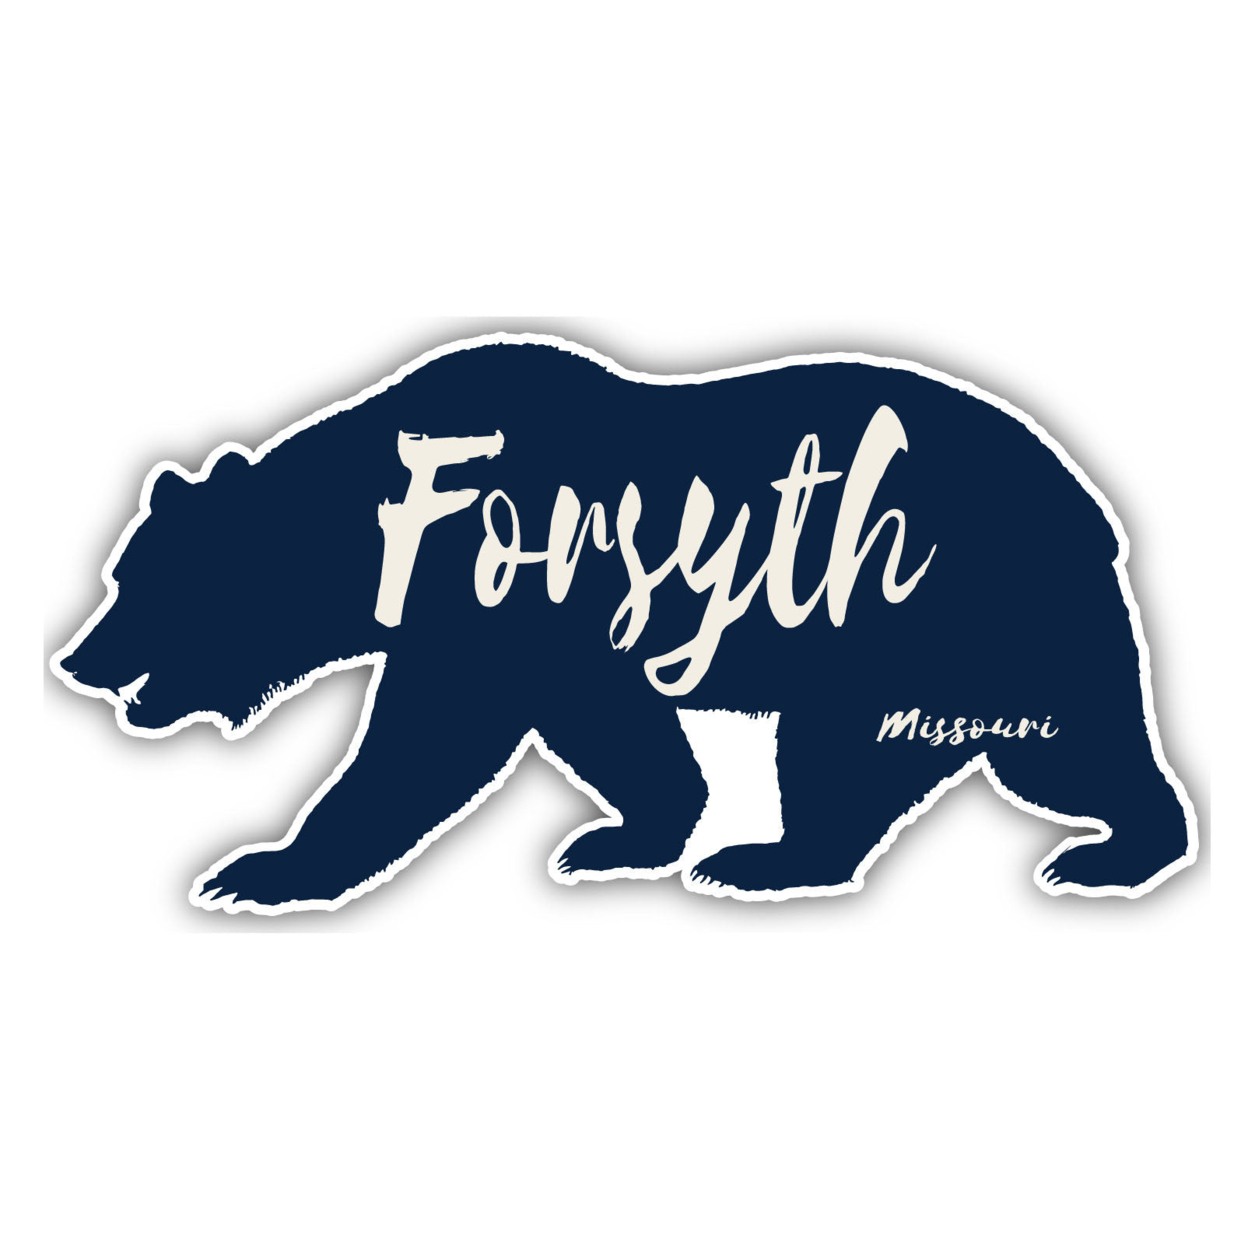 Forsyth Missouri Souvenir Decorative Stickers (Choose Theme And Size) - Single Unit, 2-Inch, Bear